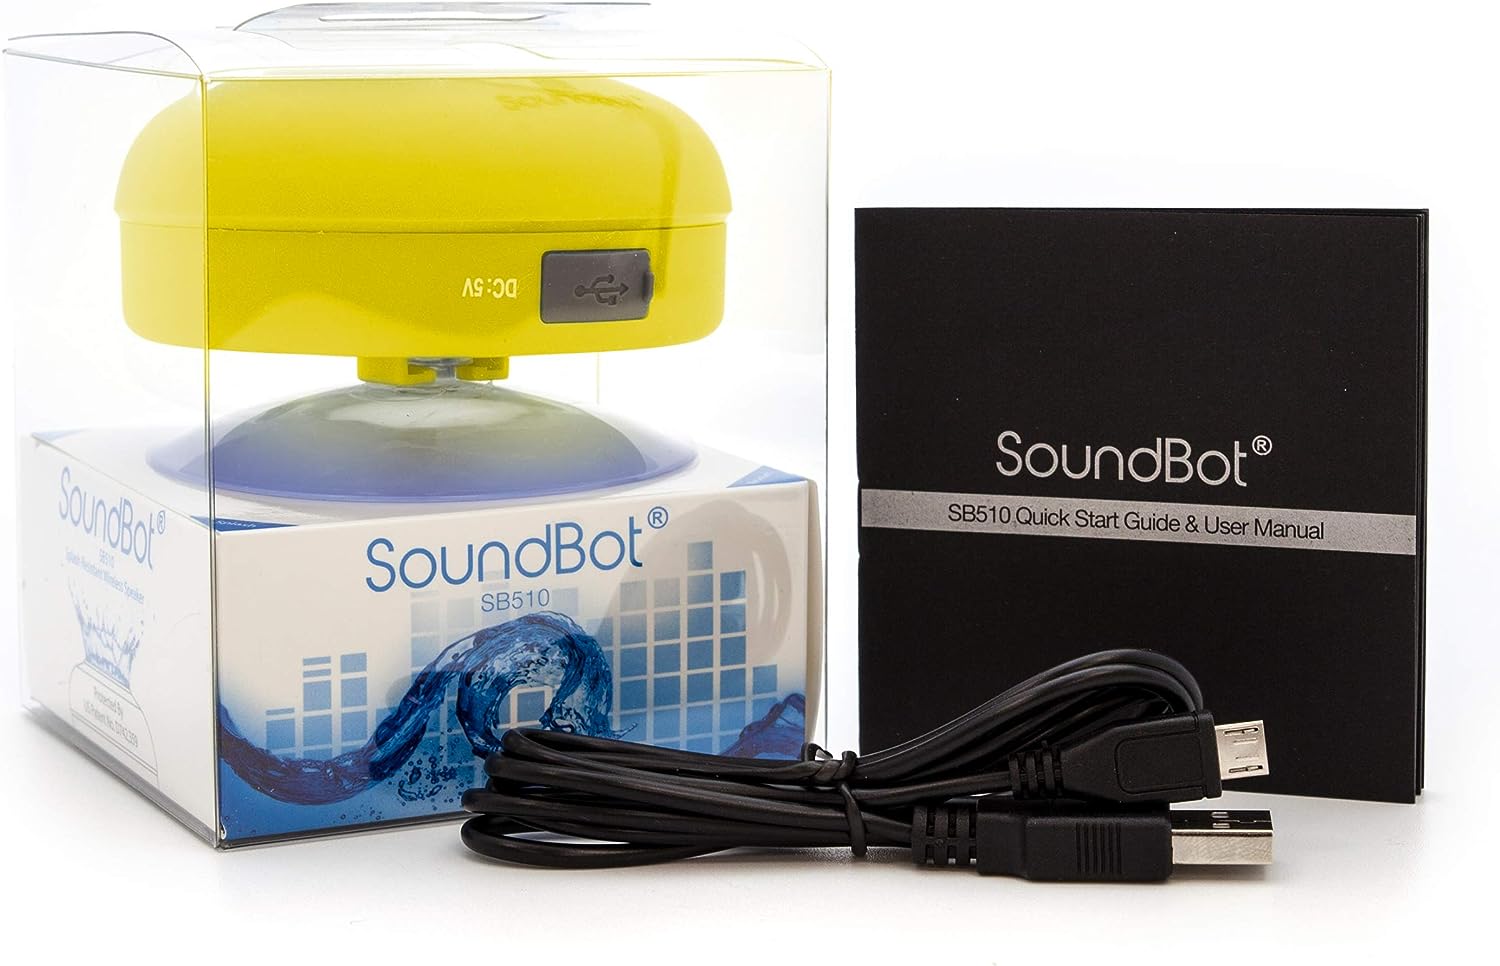 SoundBot 1.59 oz Portable Bluetooth Speaker, Yellow, SB510 - image 7 of 8